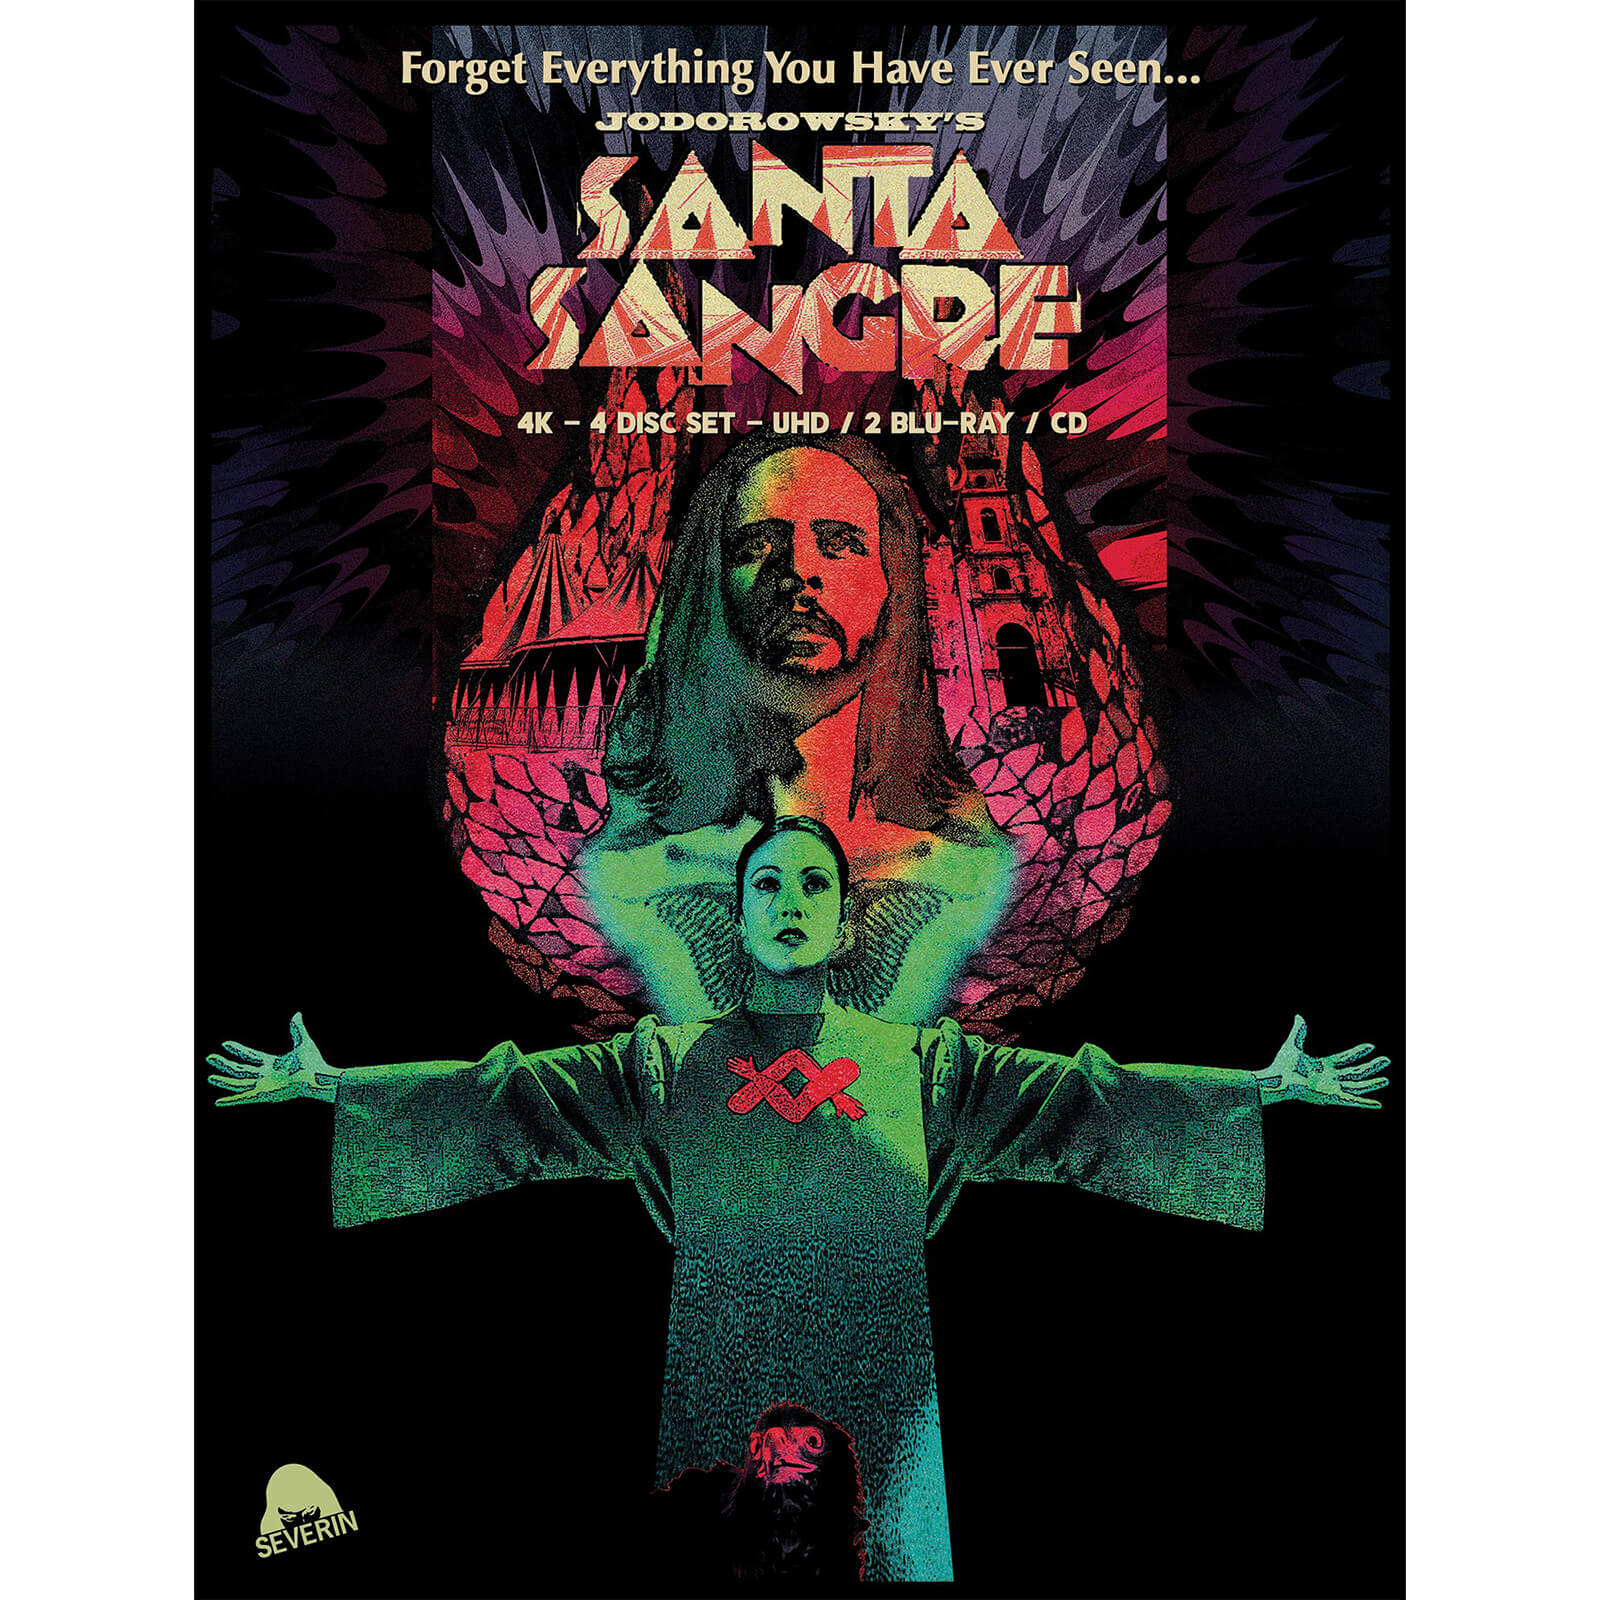 Santa Sangre - 4K Ultra HD (Includes Blu-ray and CD)